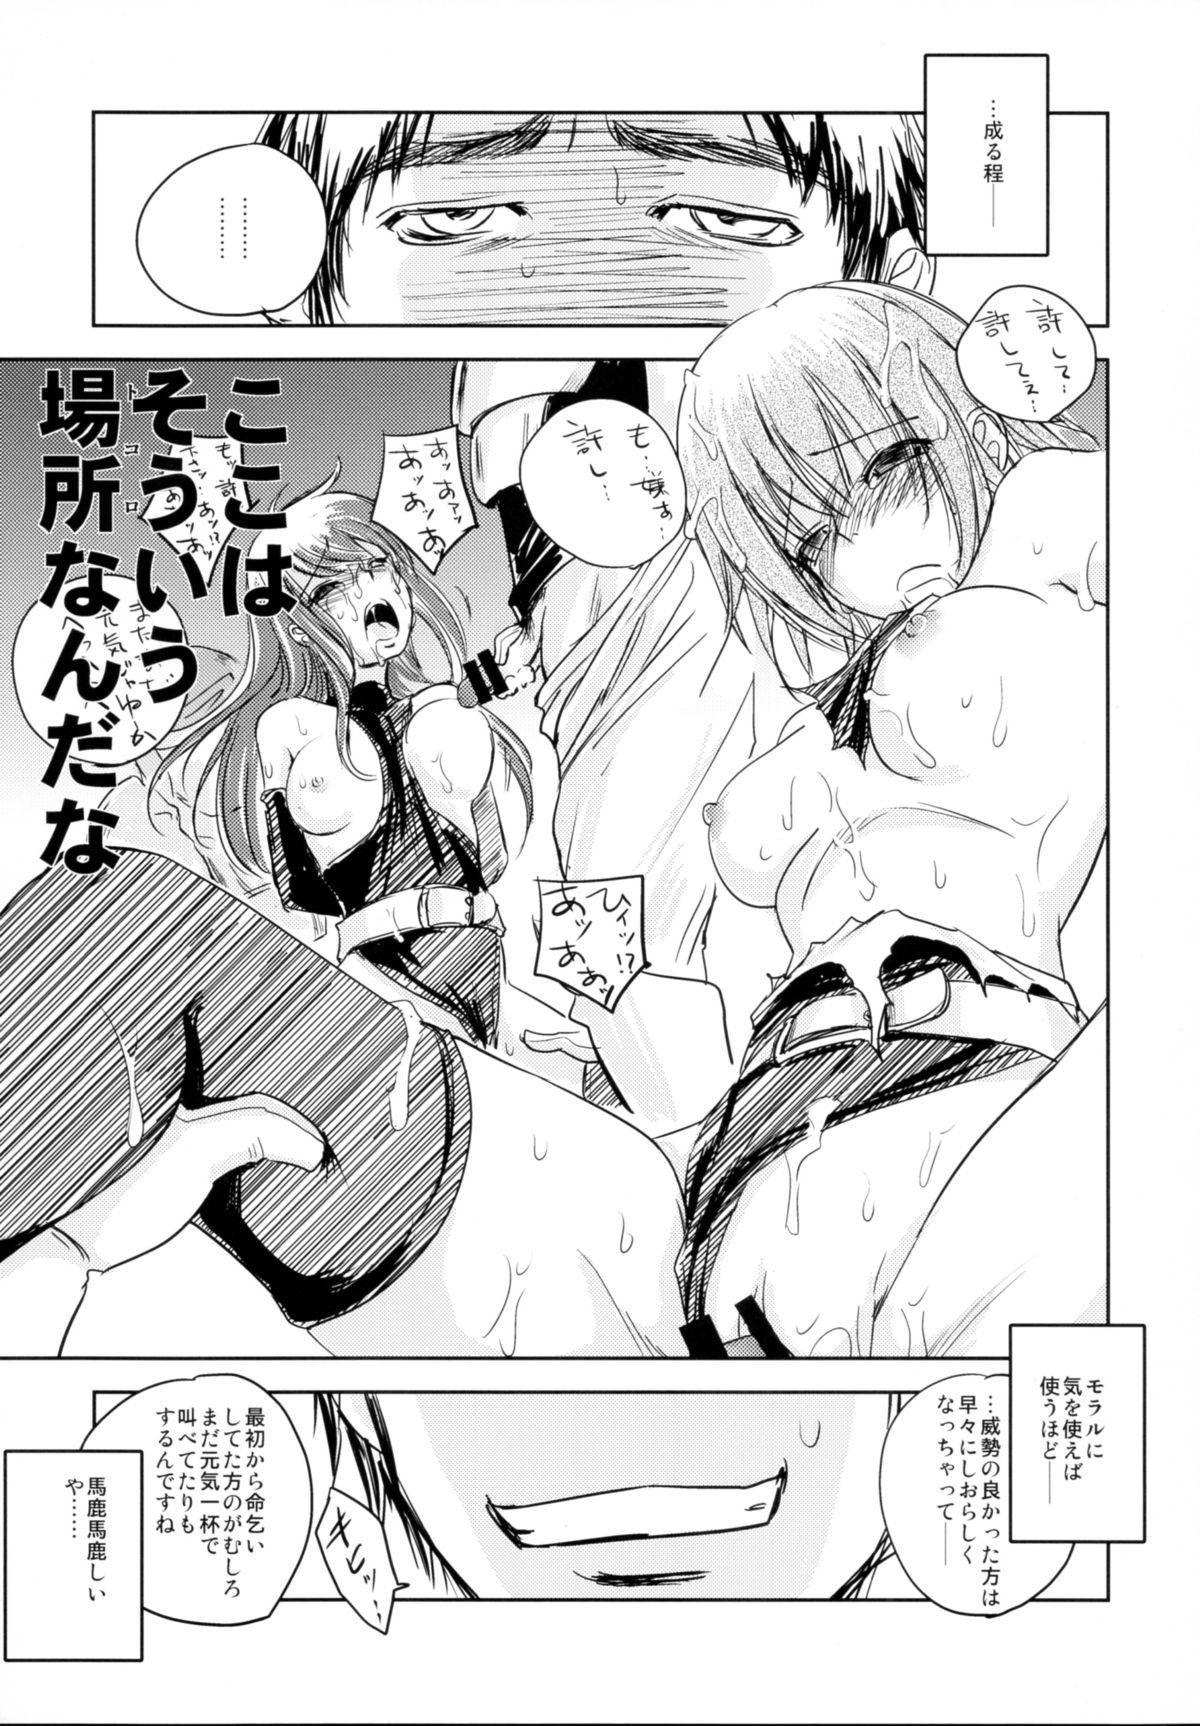 Teenfuns GRASSEN'S WAR ANOTHER STORY Ex #03 Node Shinkou III Bunduda - Page 11